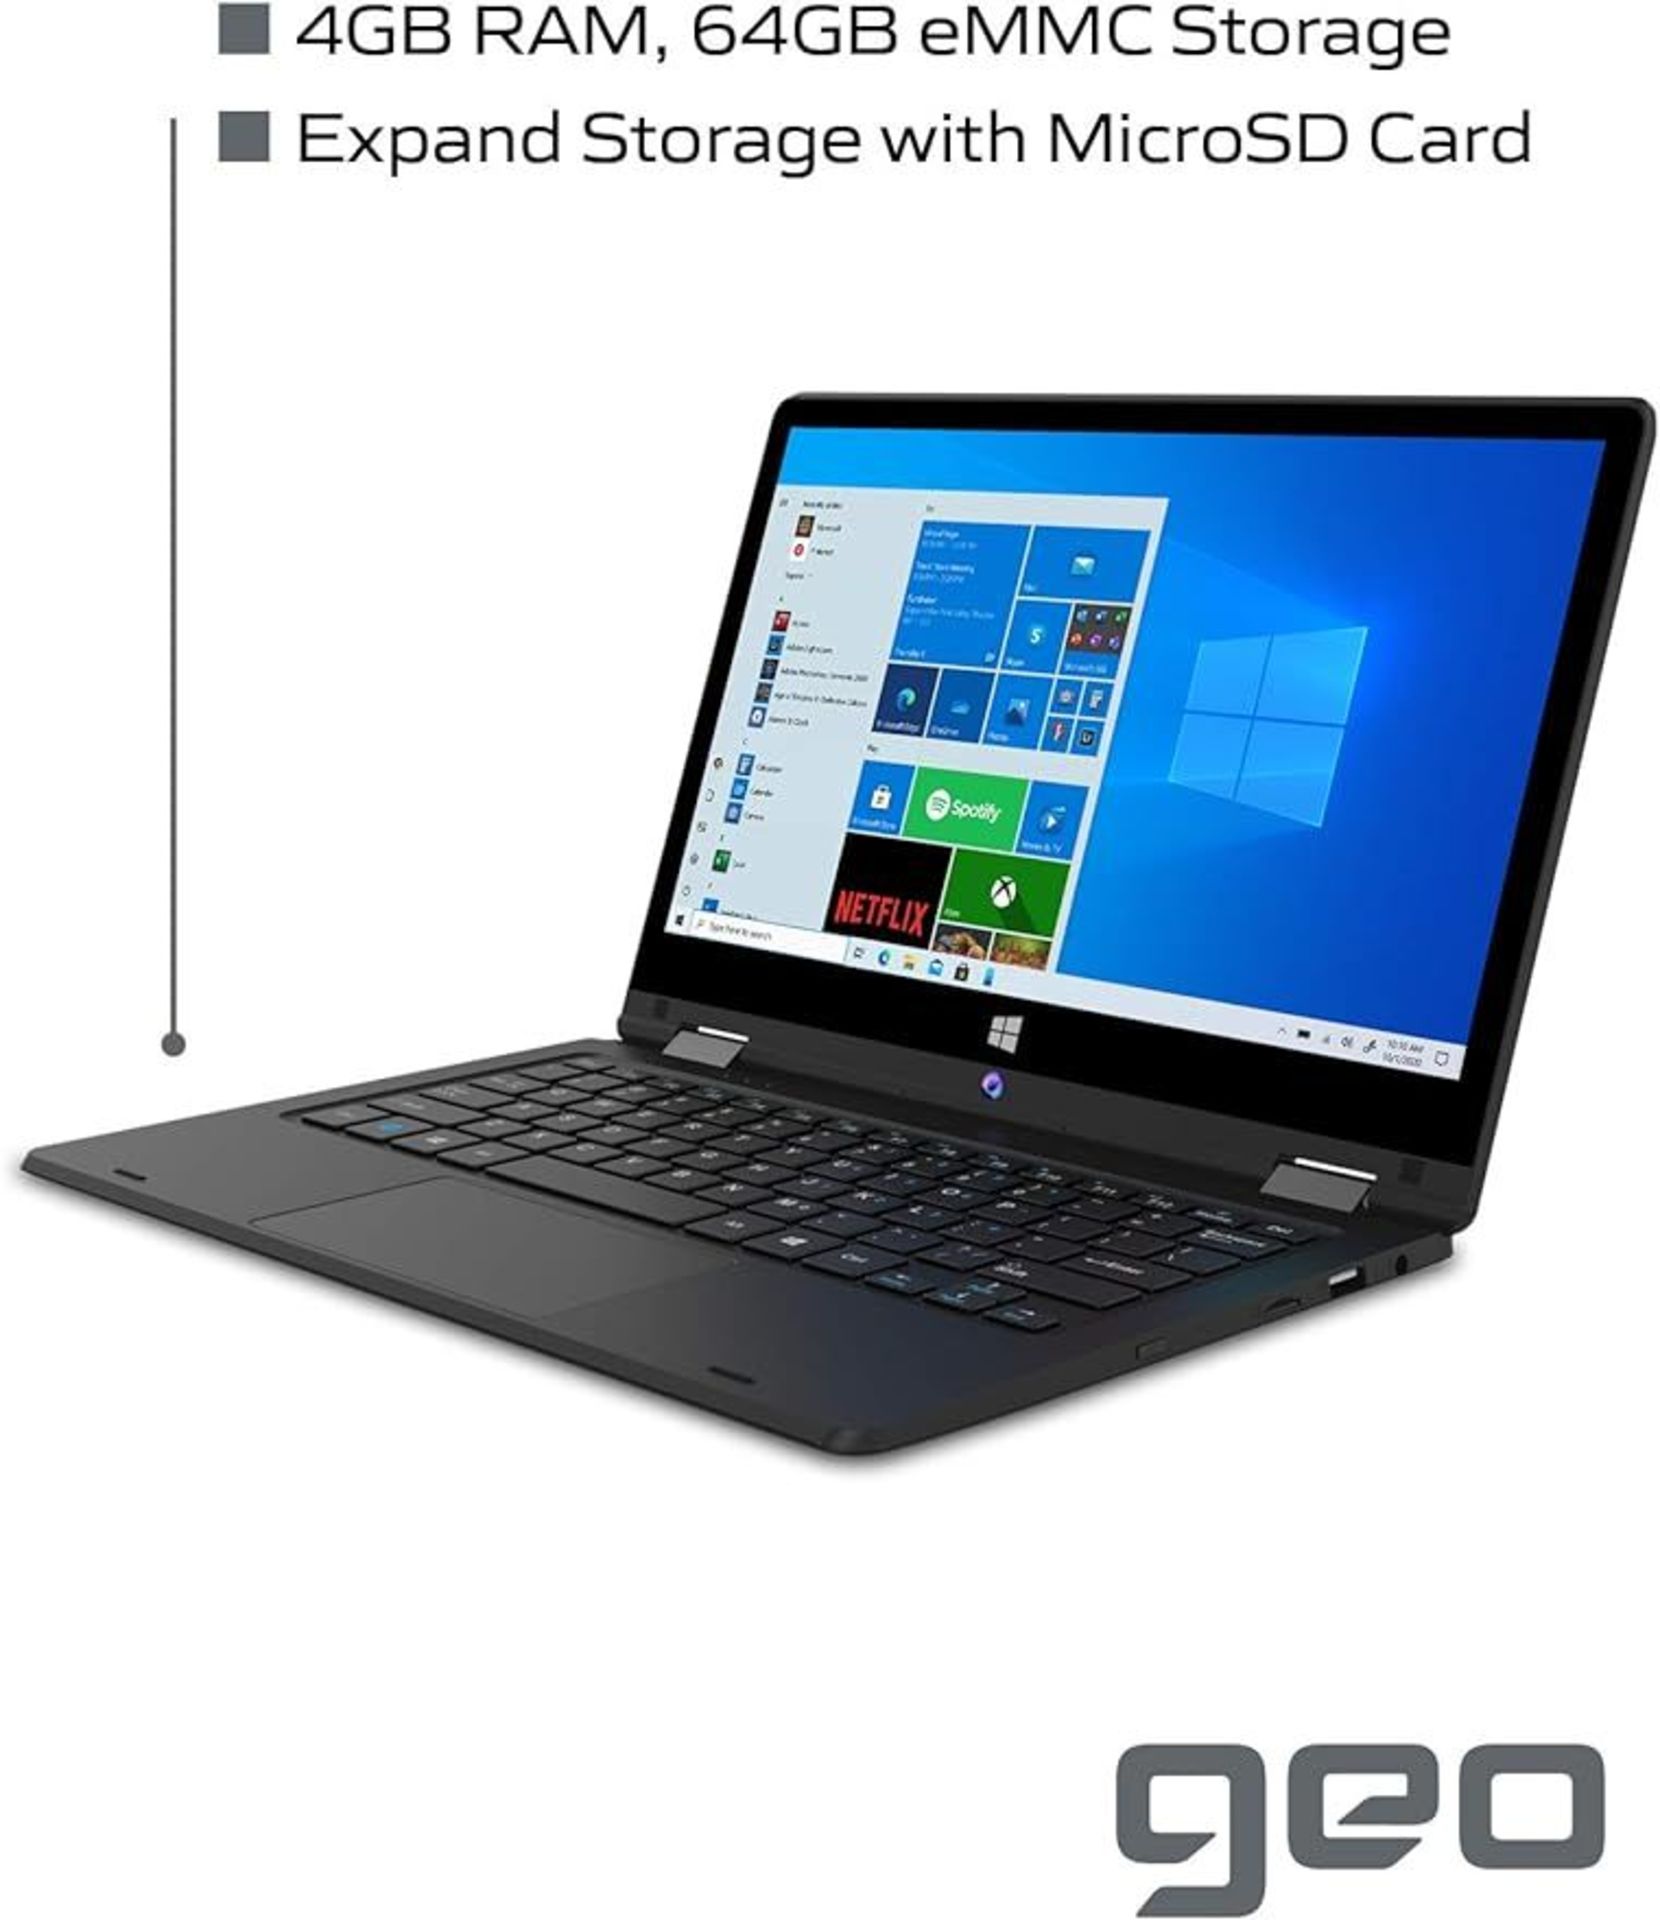 GeoFlex 110 Convertible Laptop and Tablet 11.6-inch HD Touchscreen Windows 10 Intel Celeron 4GB RAM, - Bild 2 aus 2